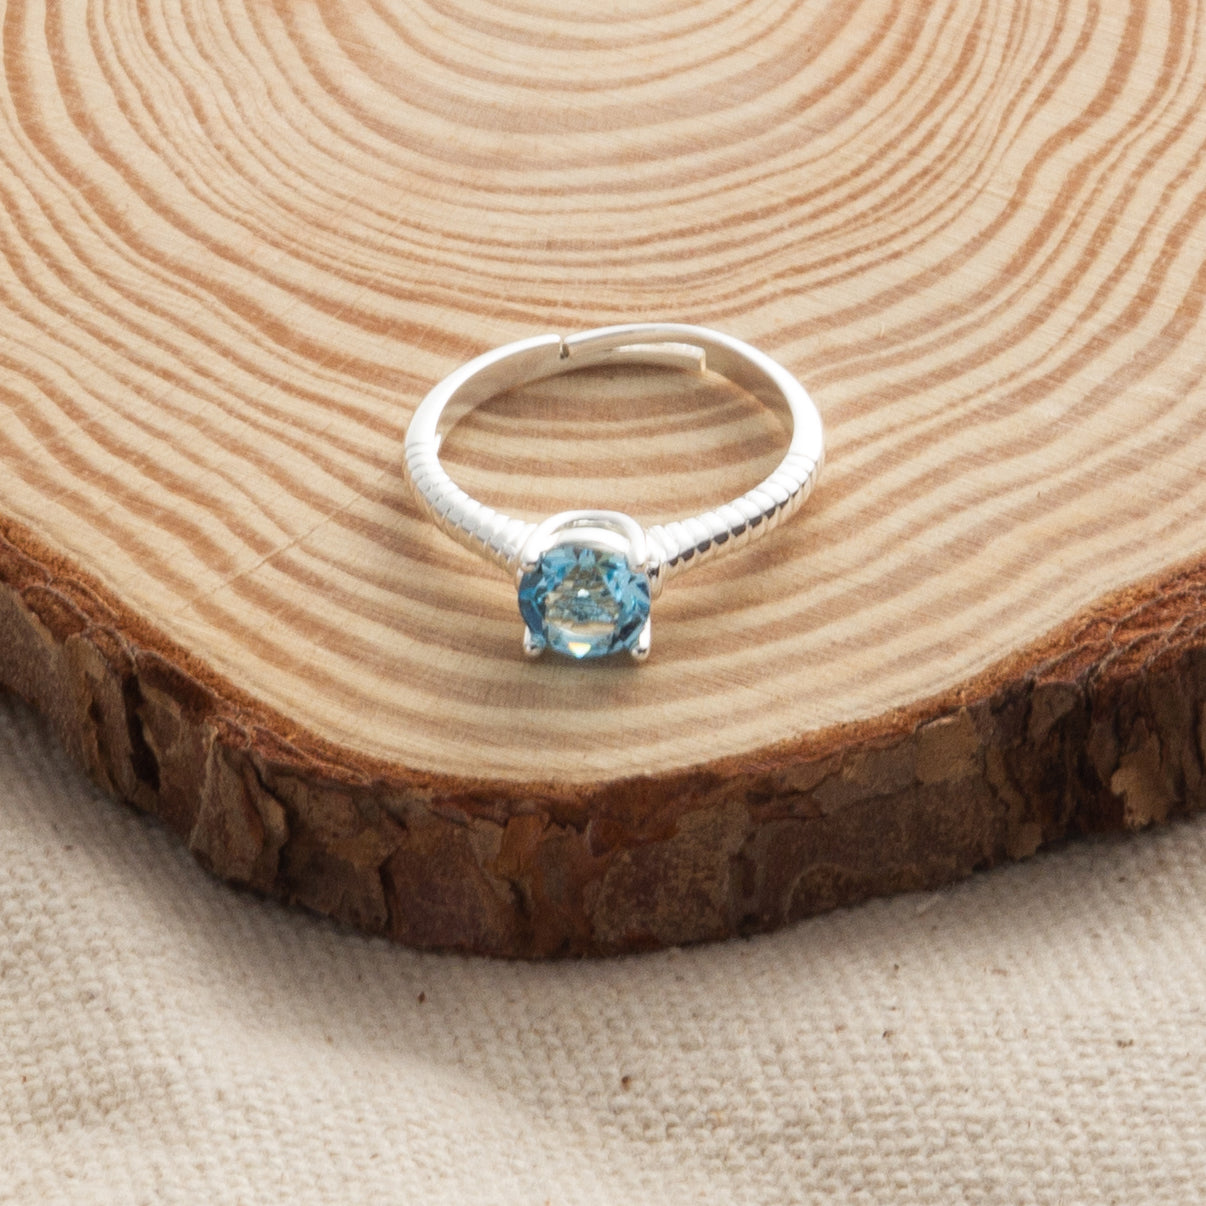 March (Aquamarine) Adjustable Birthstone Ring Created with Zircondia® Crystals